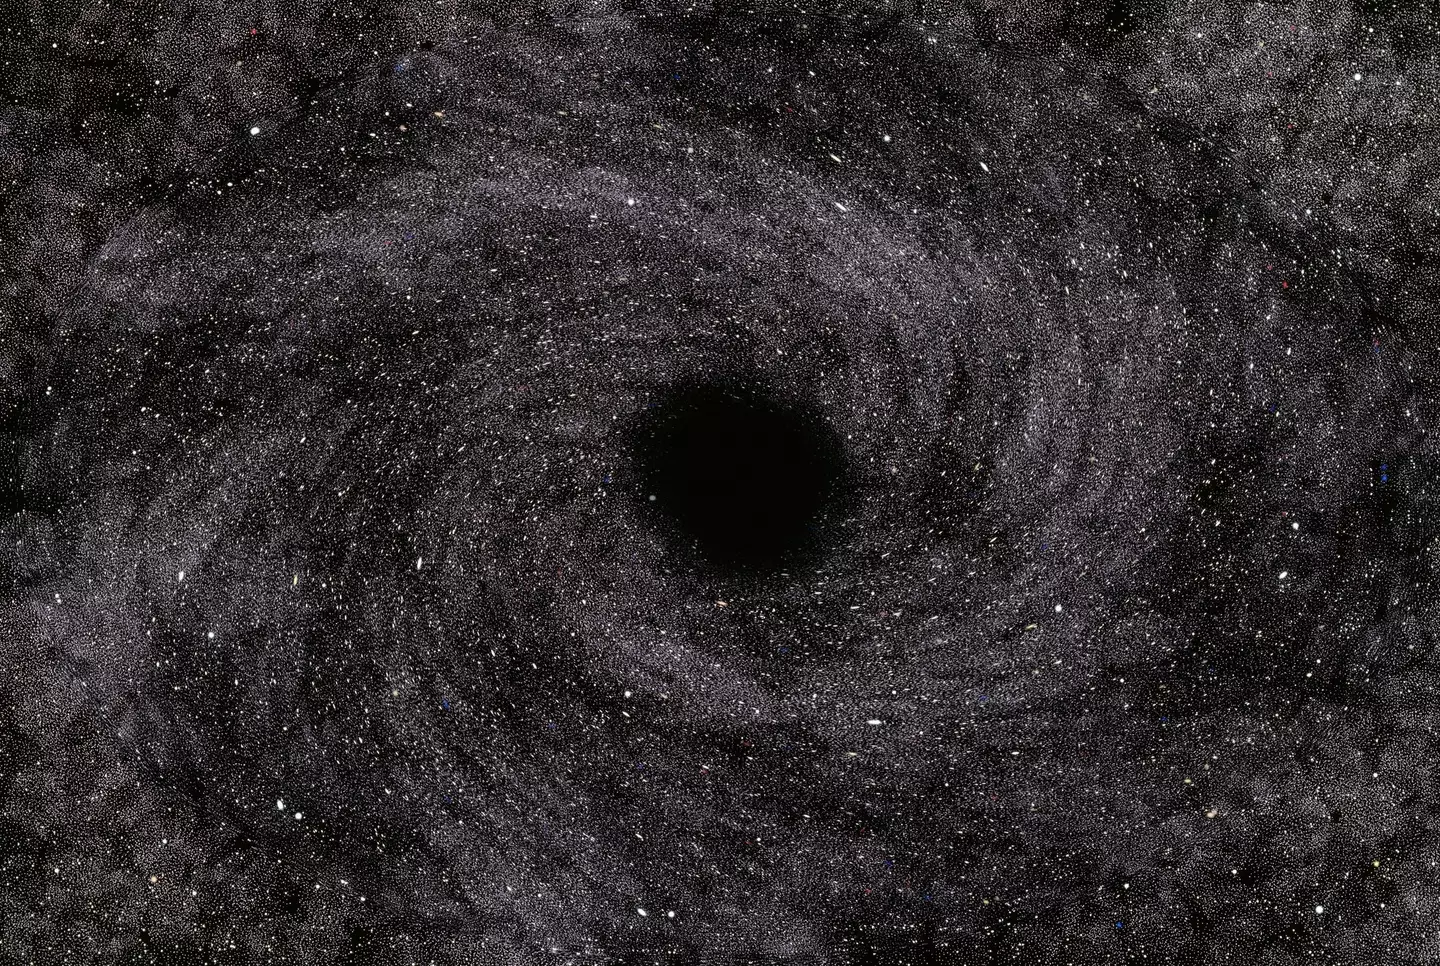 Illustration of a black hole.